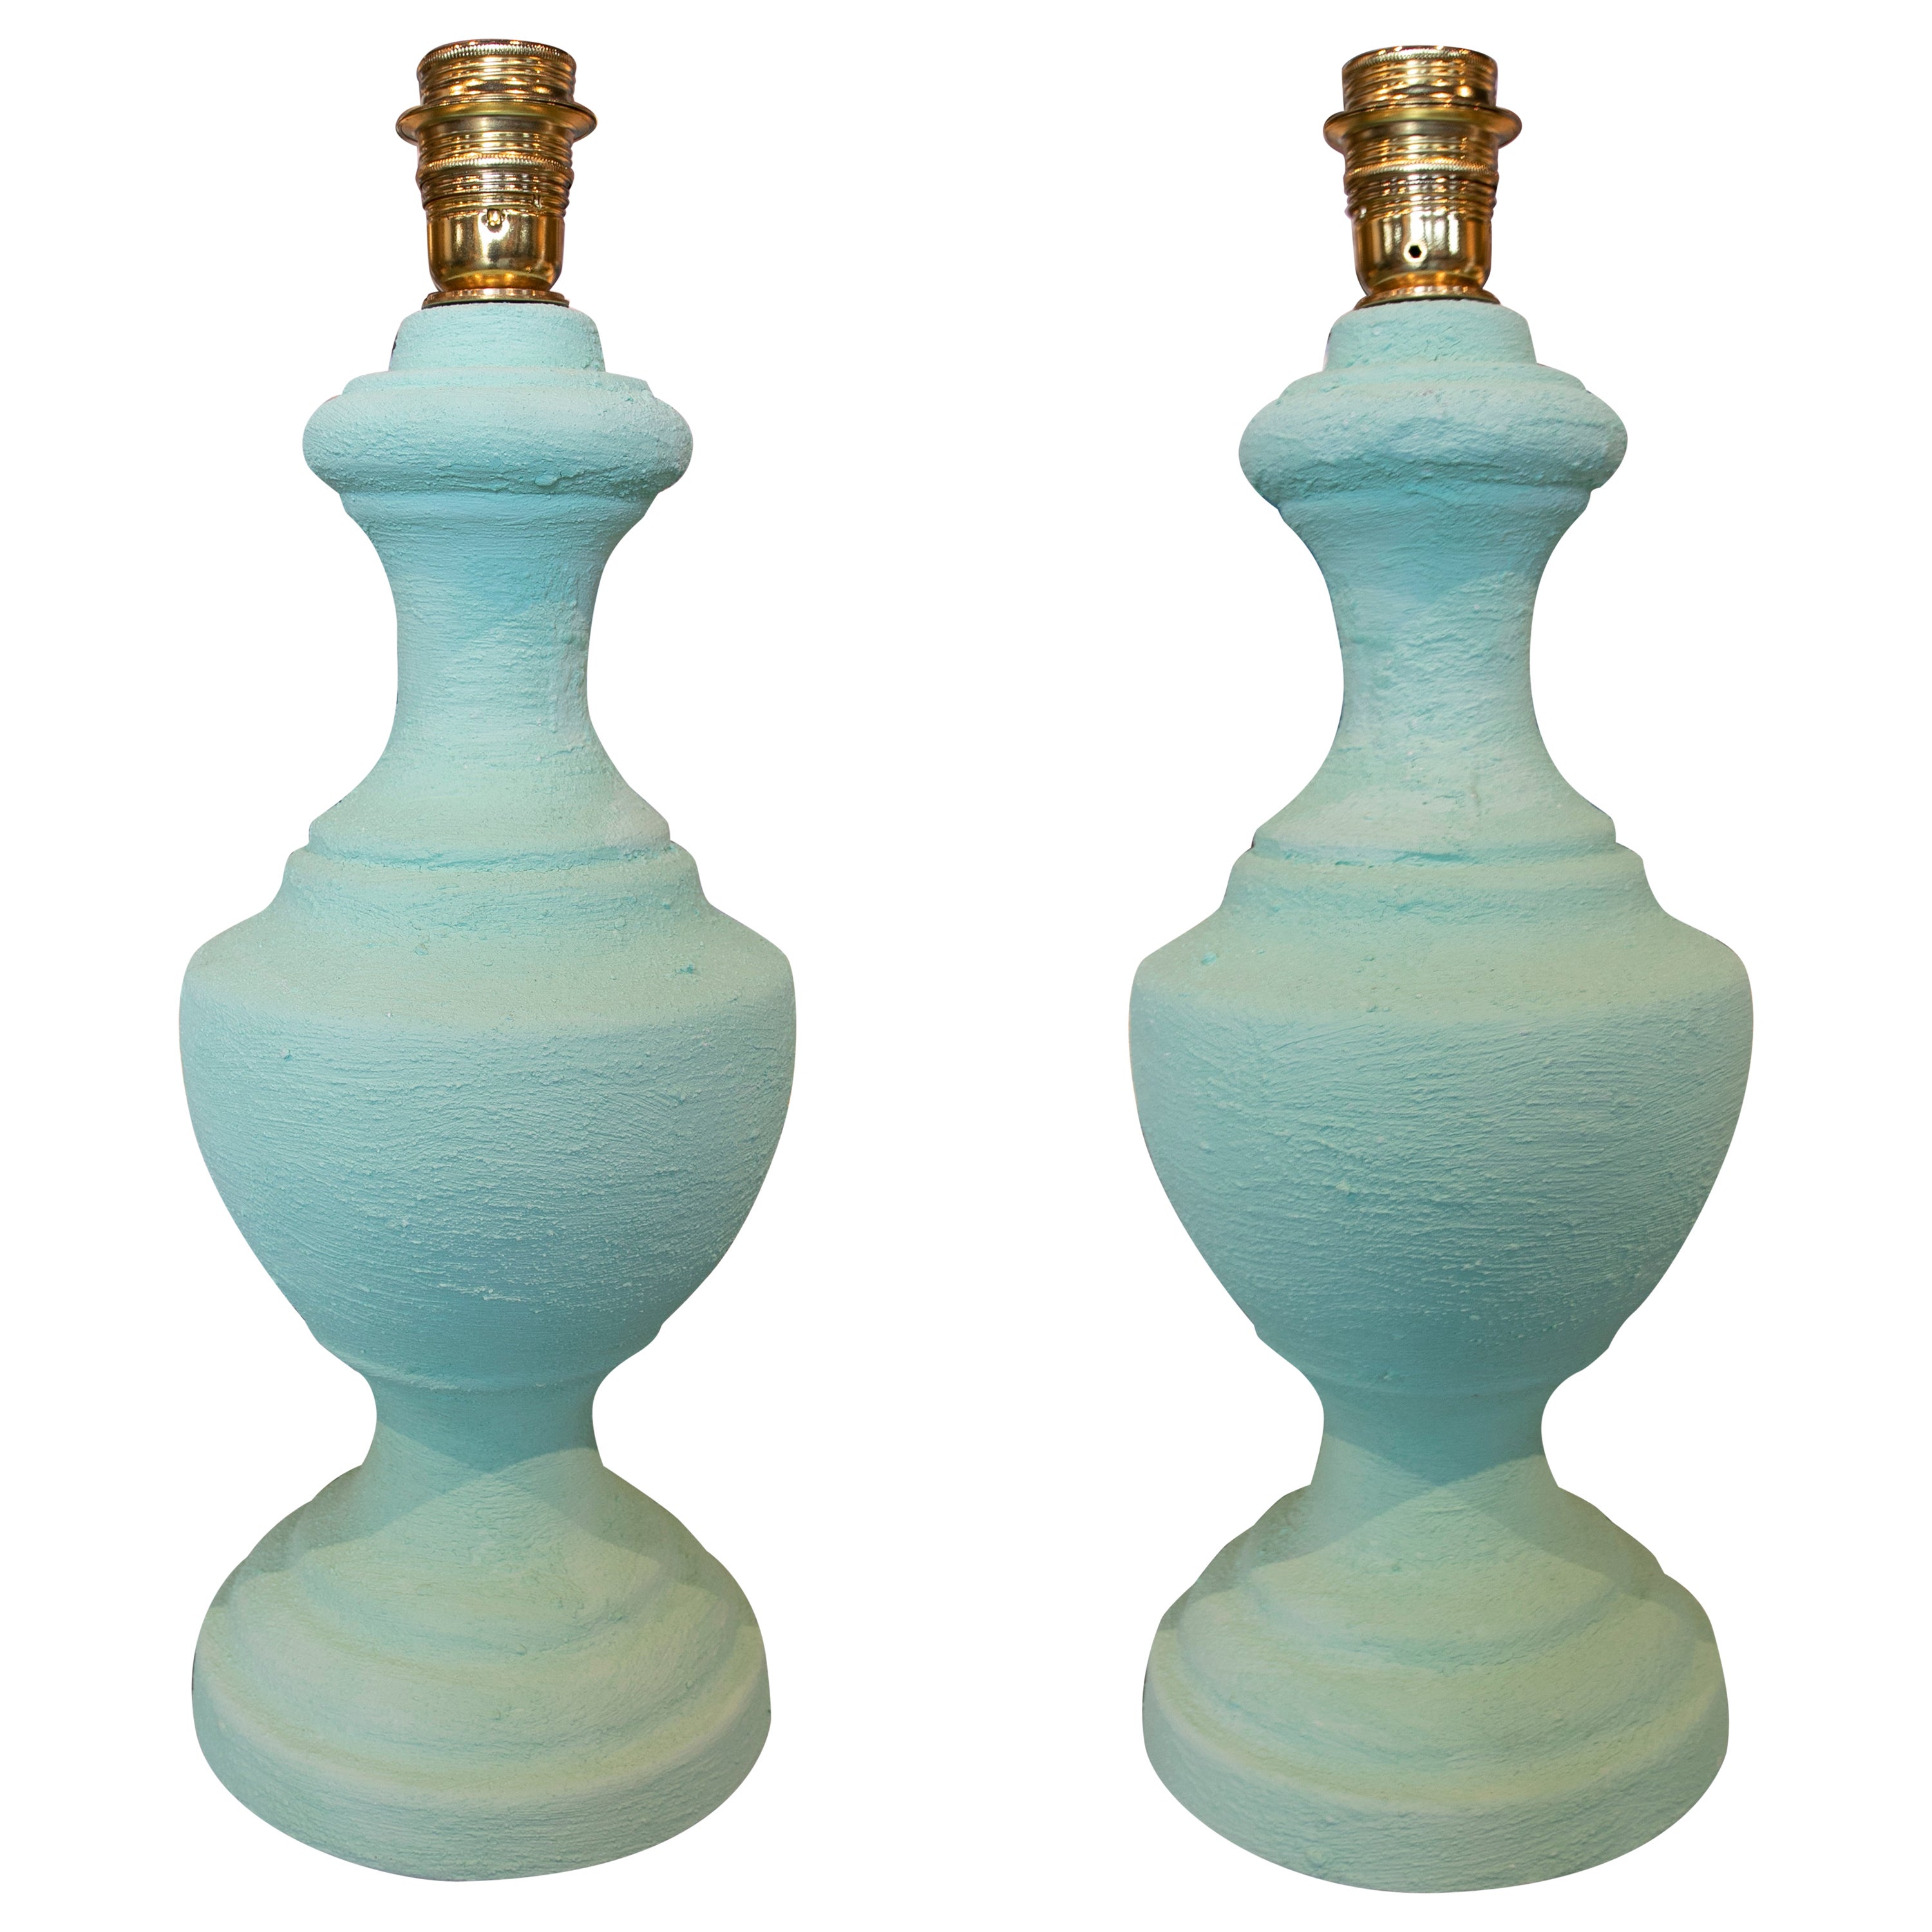 Pair of Ceramic Lamps Painted with Green Jabelga